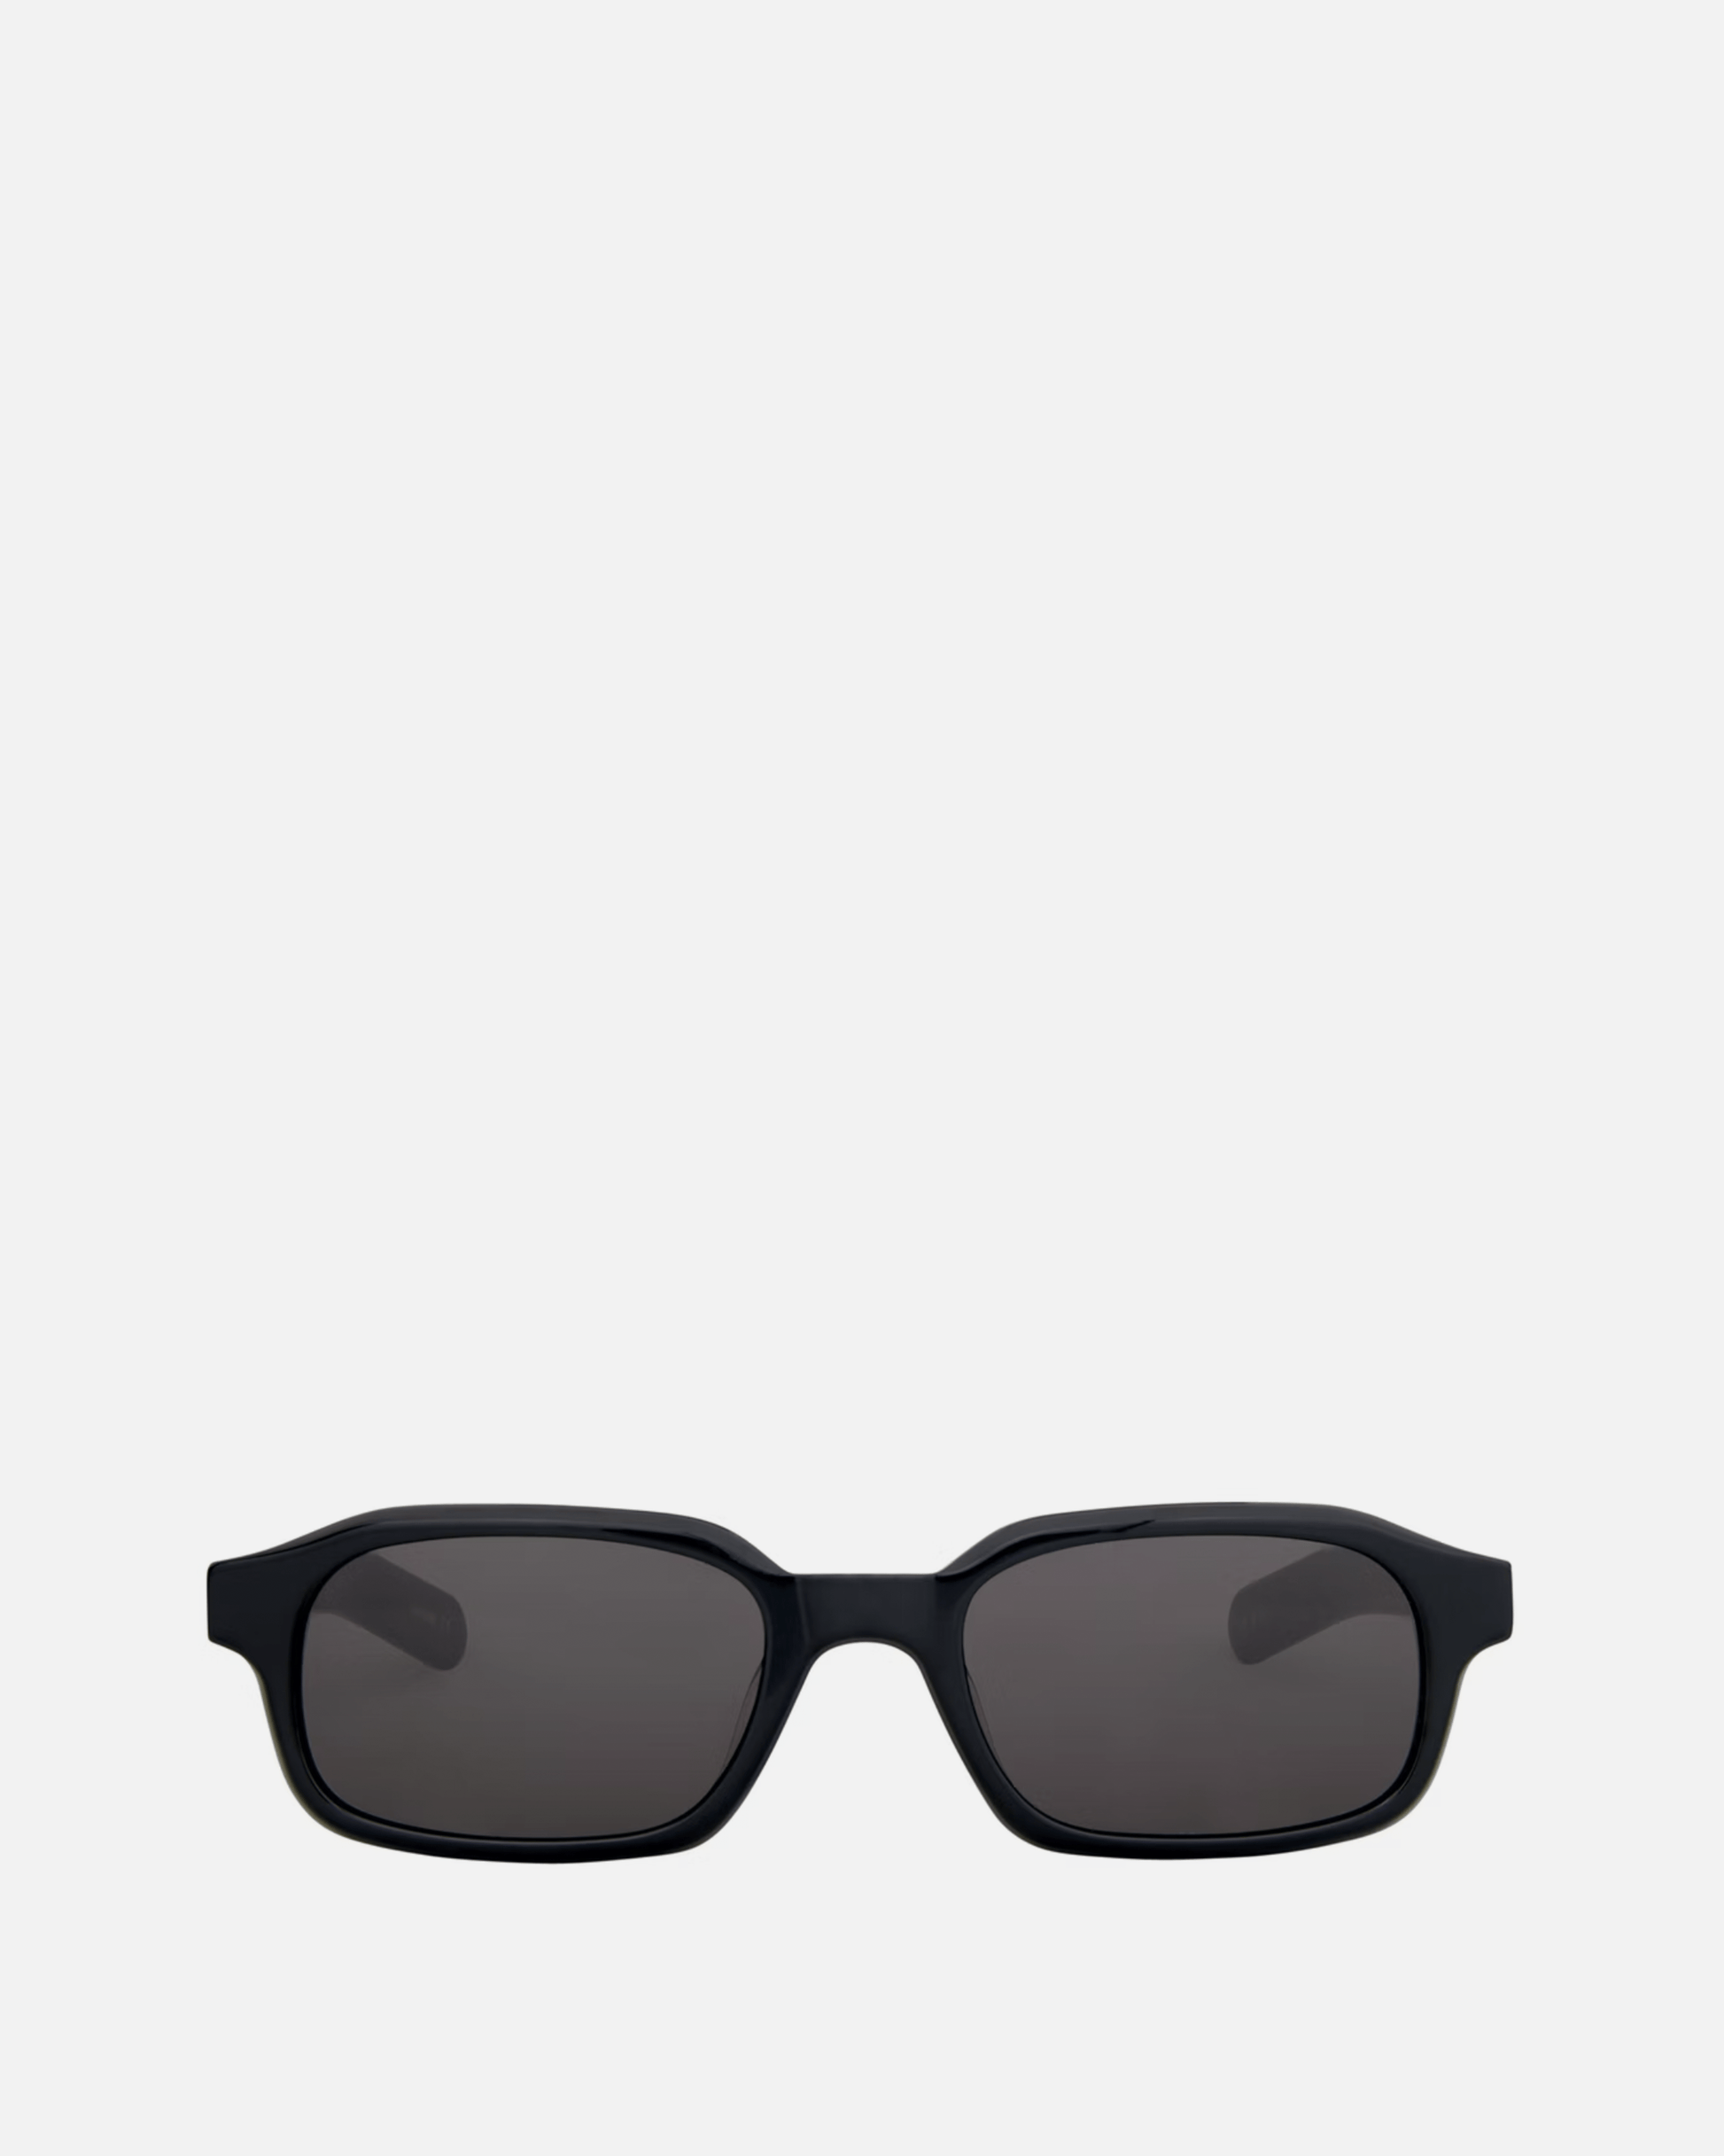 FLATLIST EYEWEAR Eyewear Hanky in Solid Black/Solid Black Lens